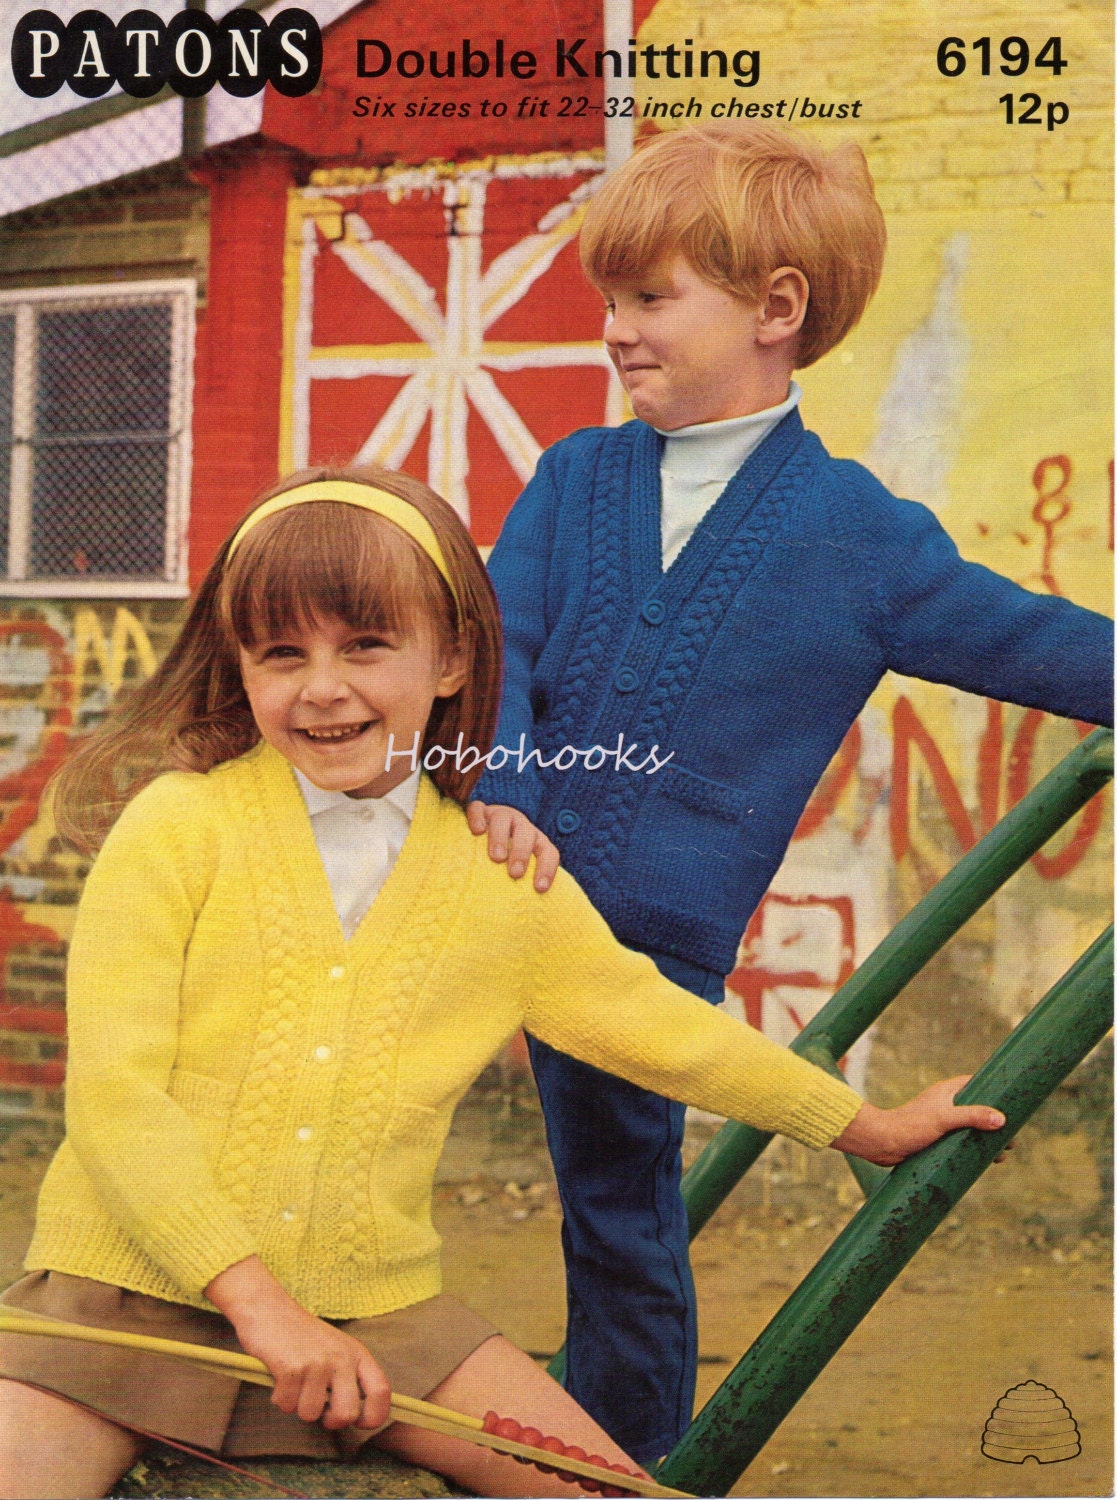 Vintage childrens cardigan knitting pattern pdf download | Etsy